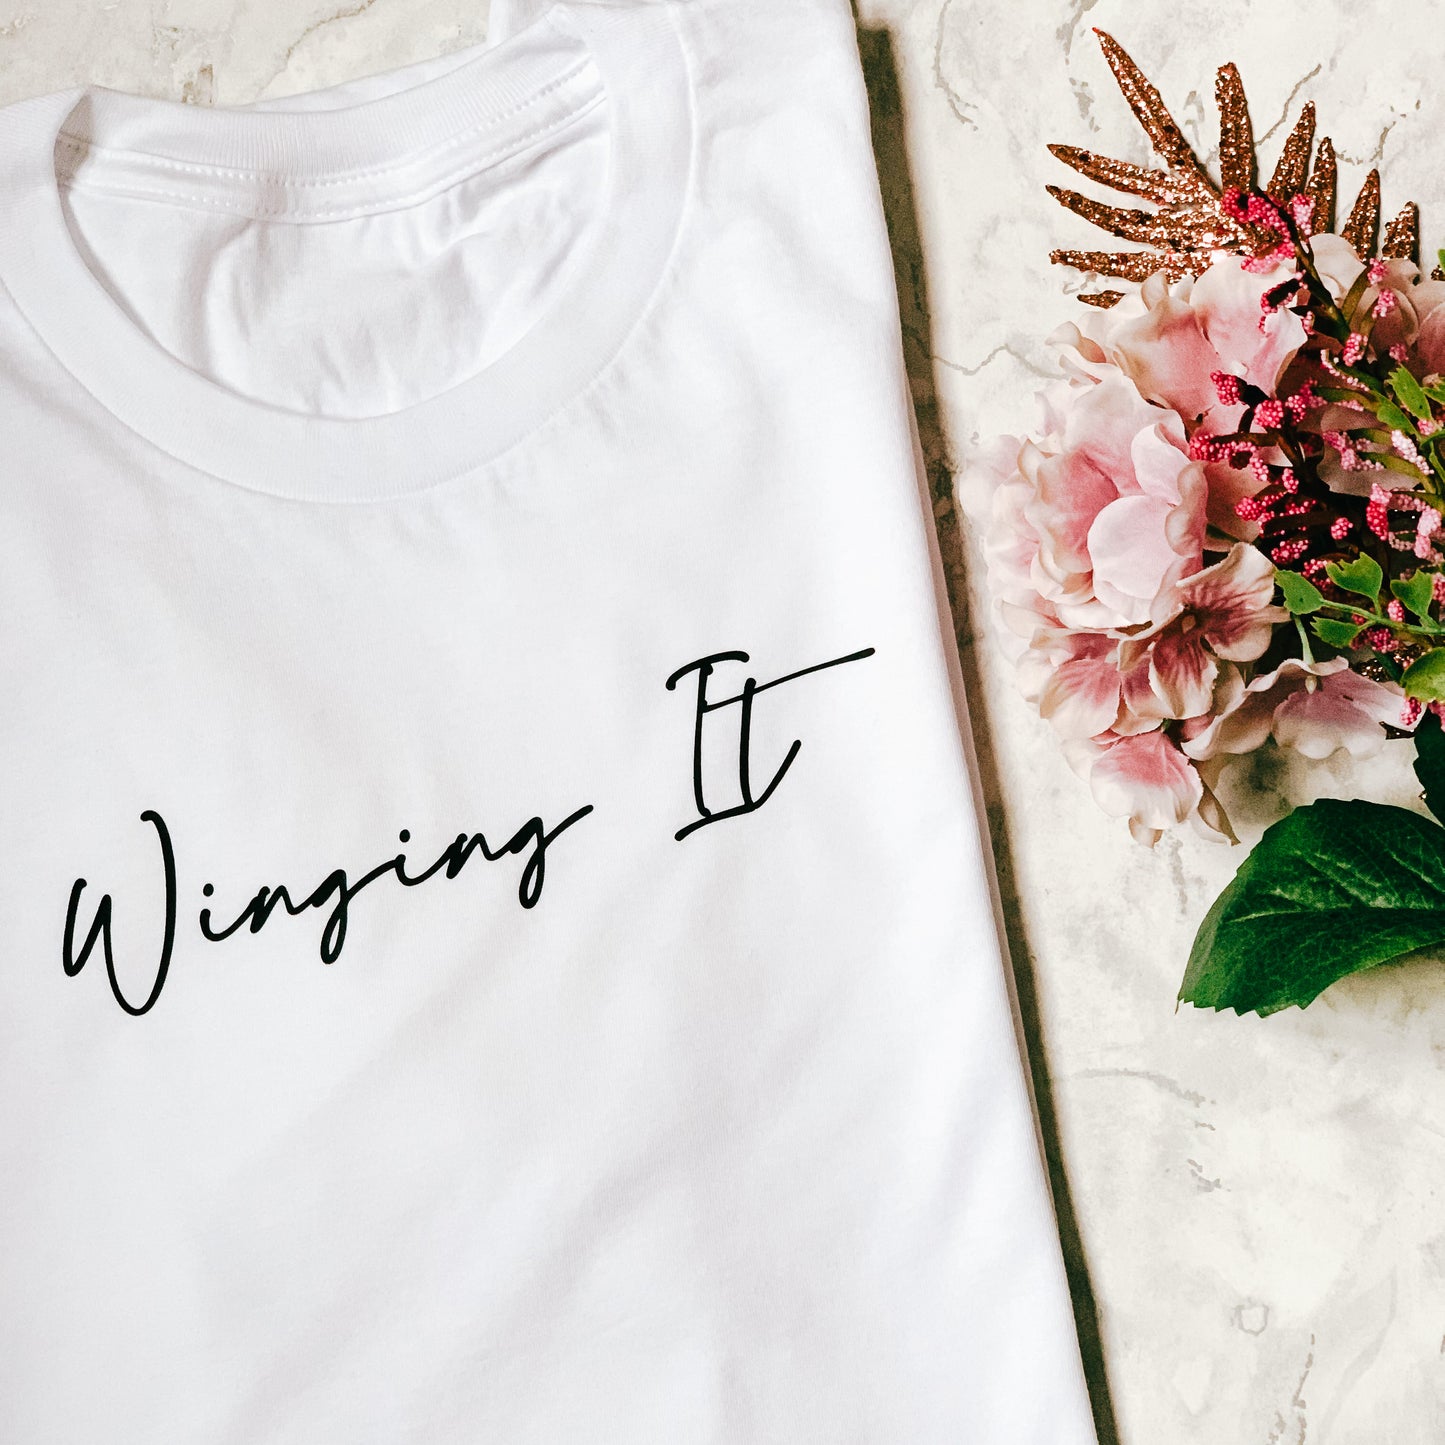 Winging It T-Shirt